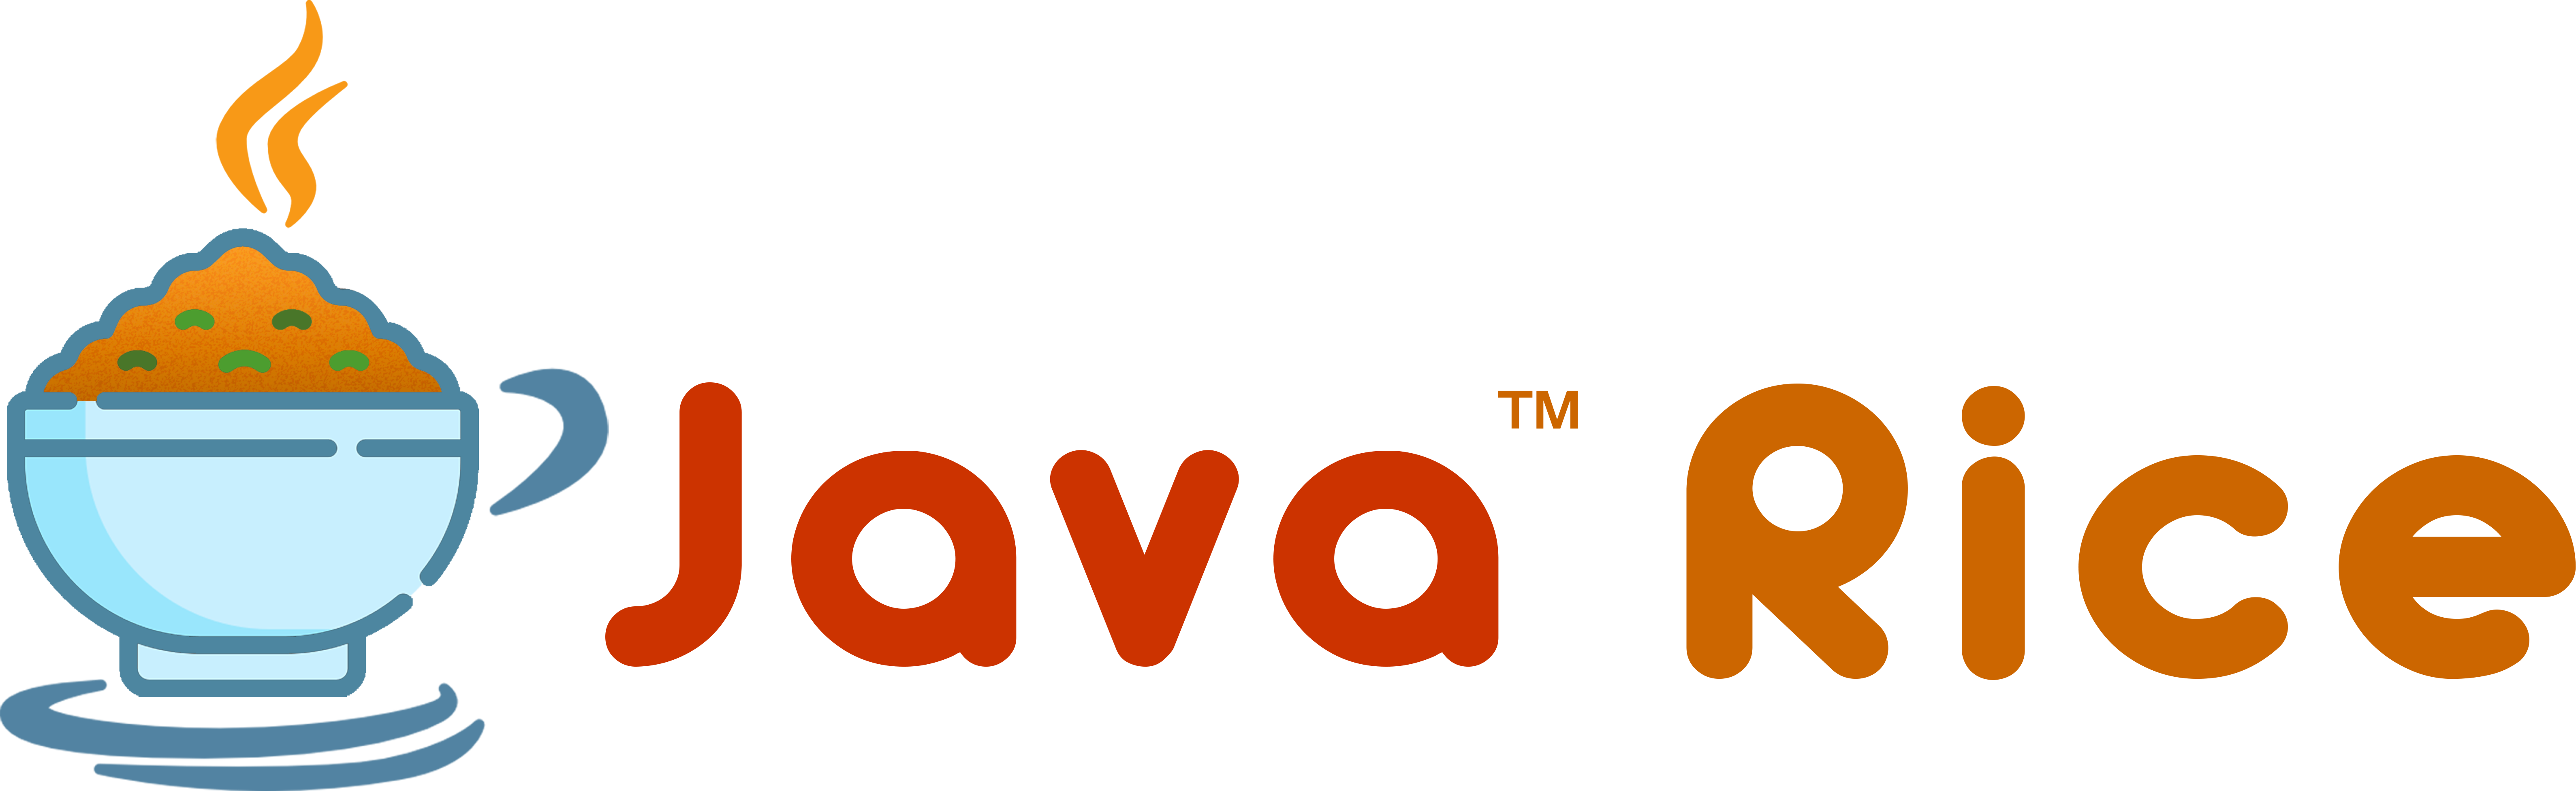 Java Rice Banner